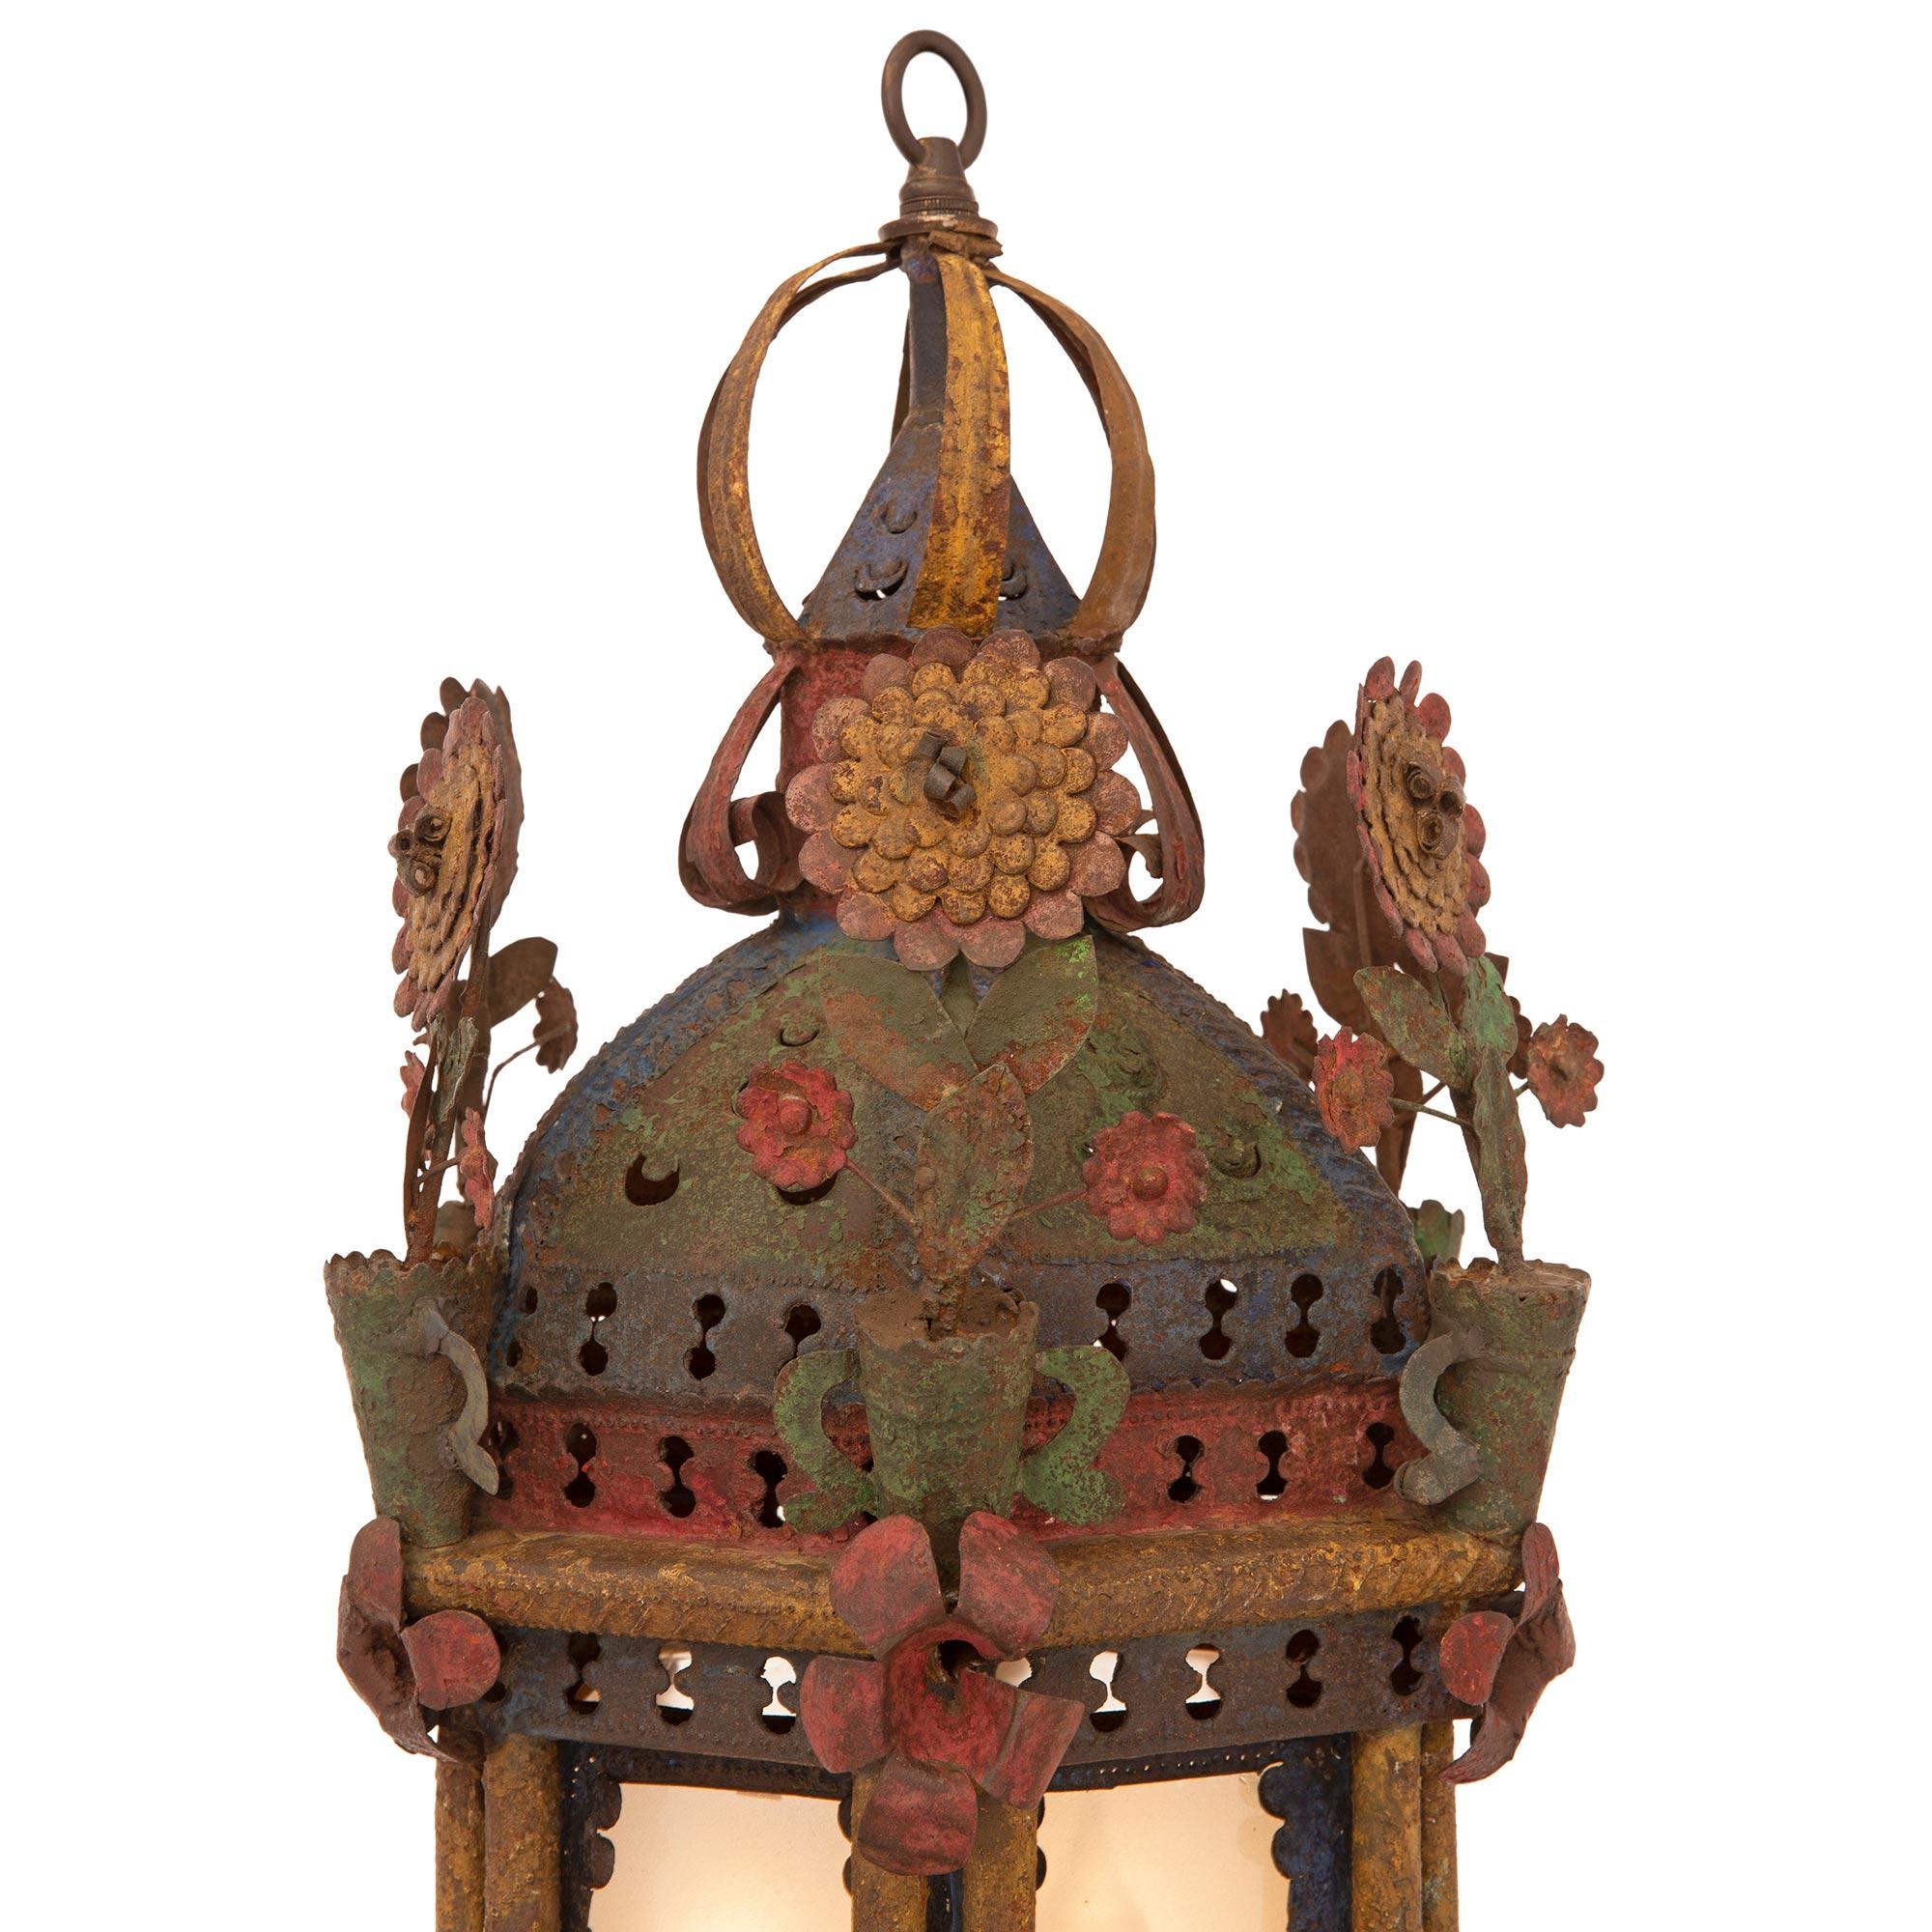 17th century lanterns